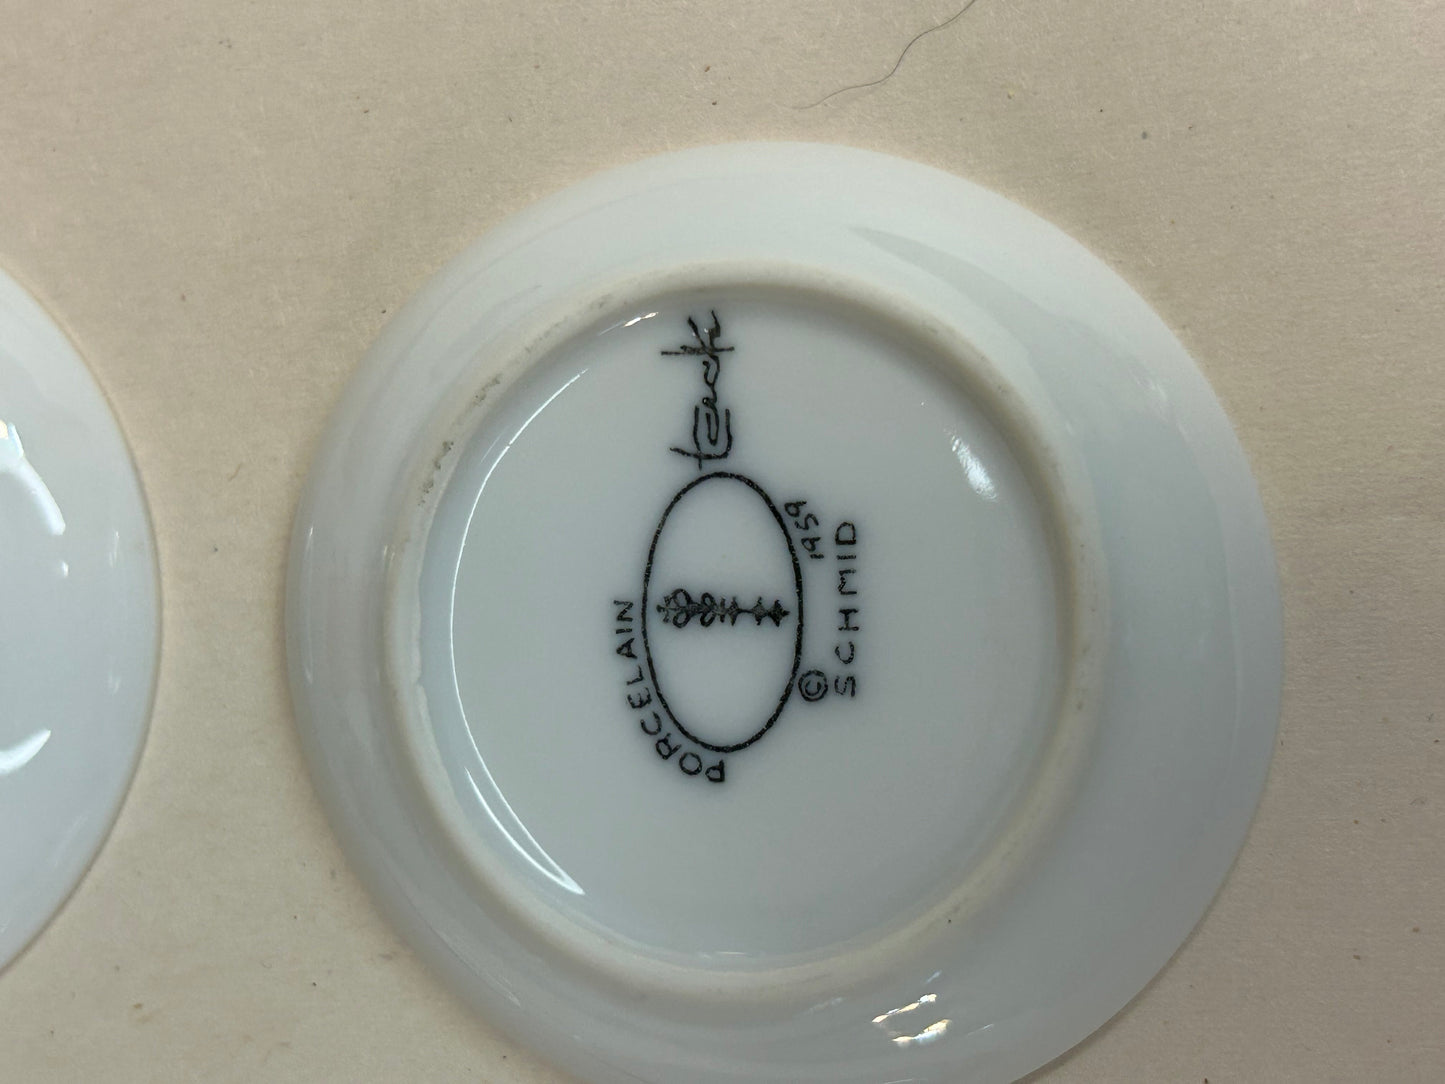 Vintage Schmid/Tackett Porcelain Demitasse/Espresso Cups with Saucers Set